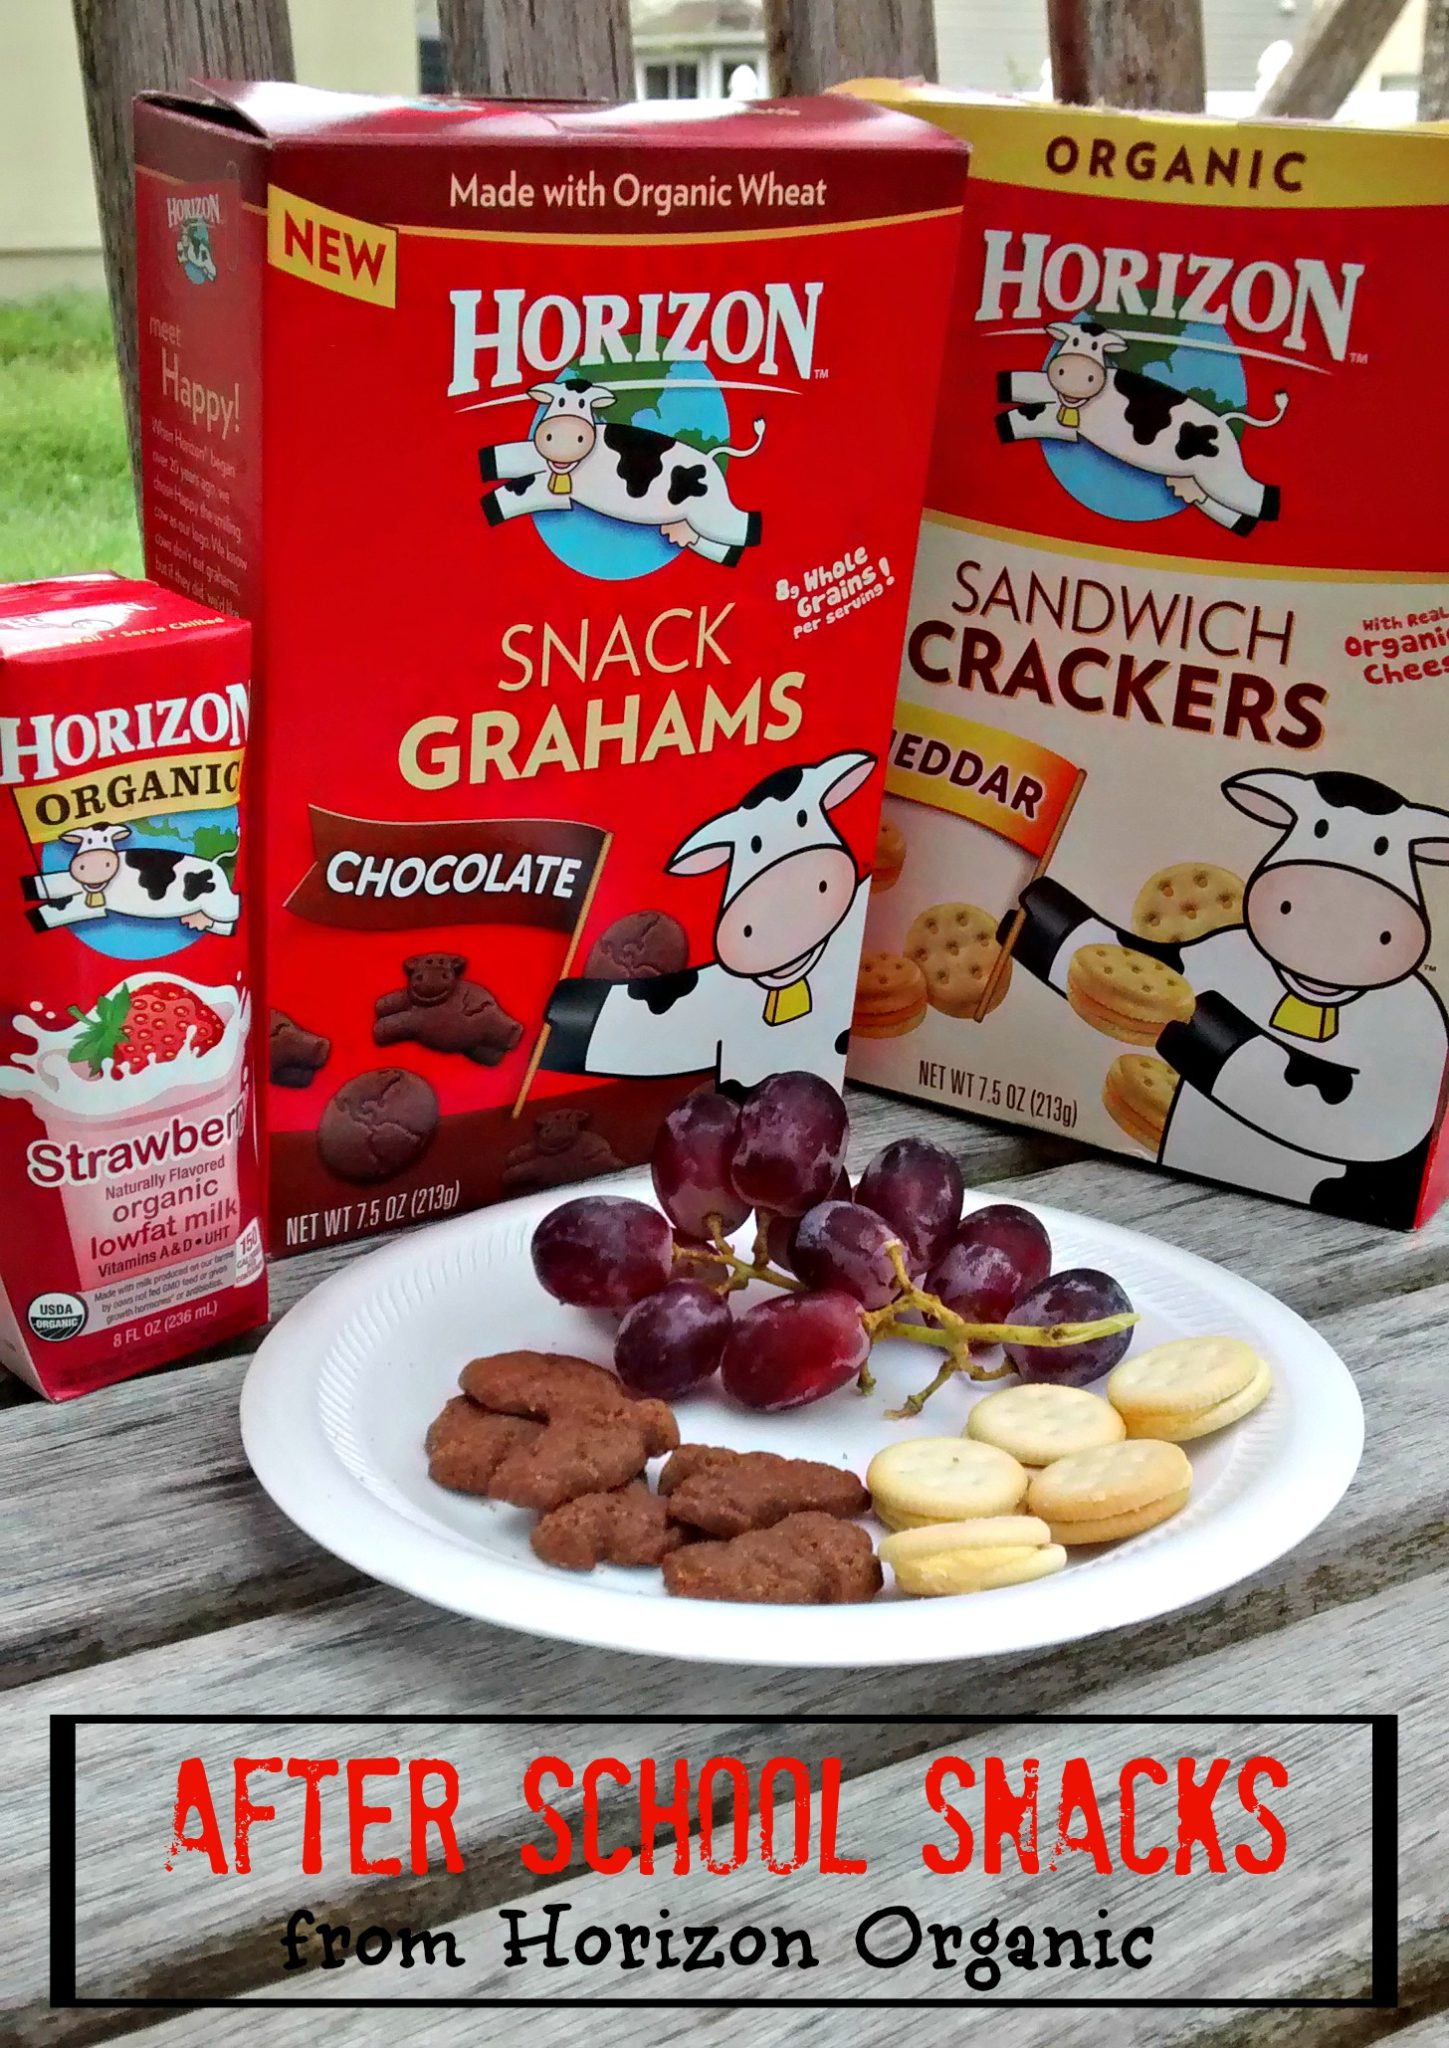 After School Snacks from Horizon Organic | Mommy Runs It #sponsored